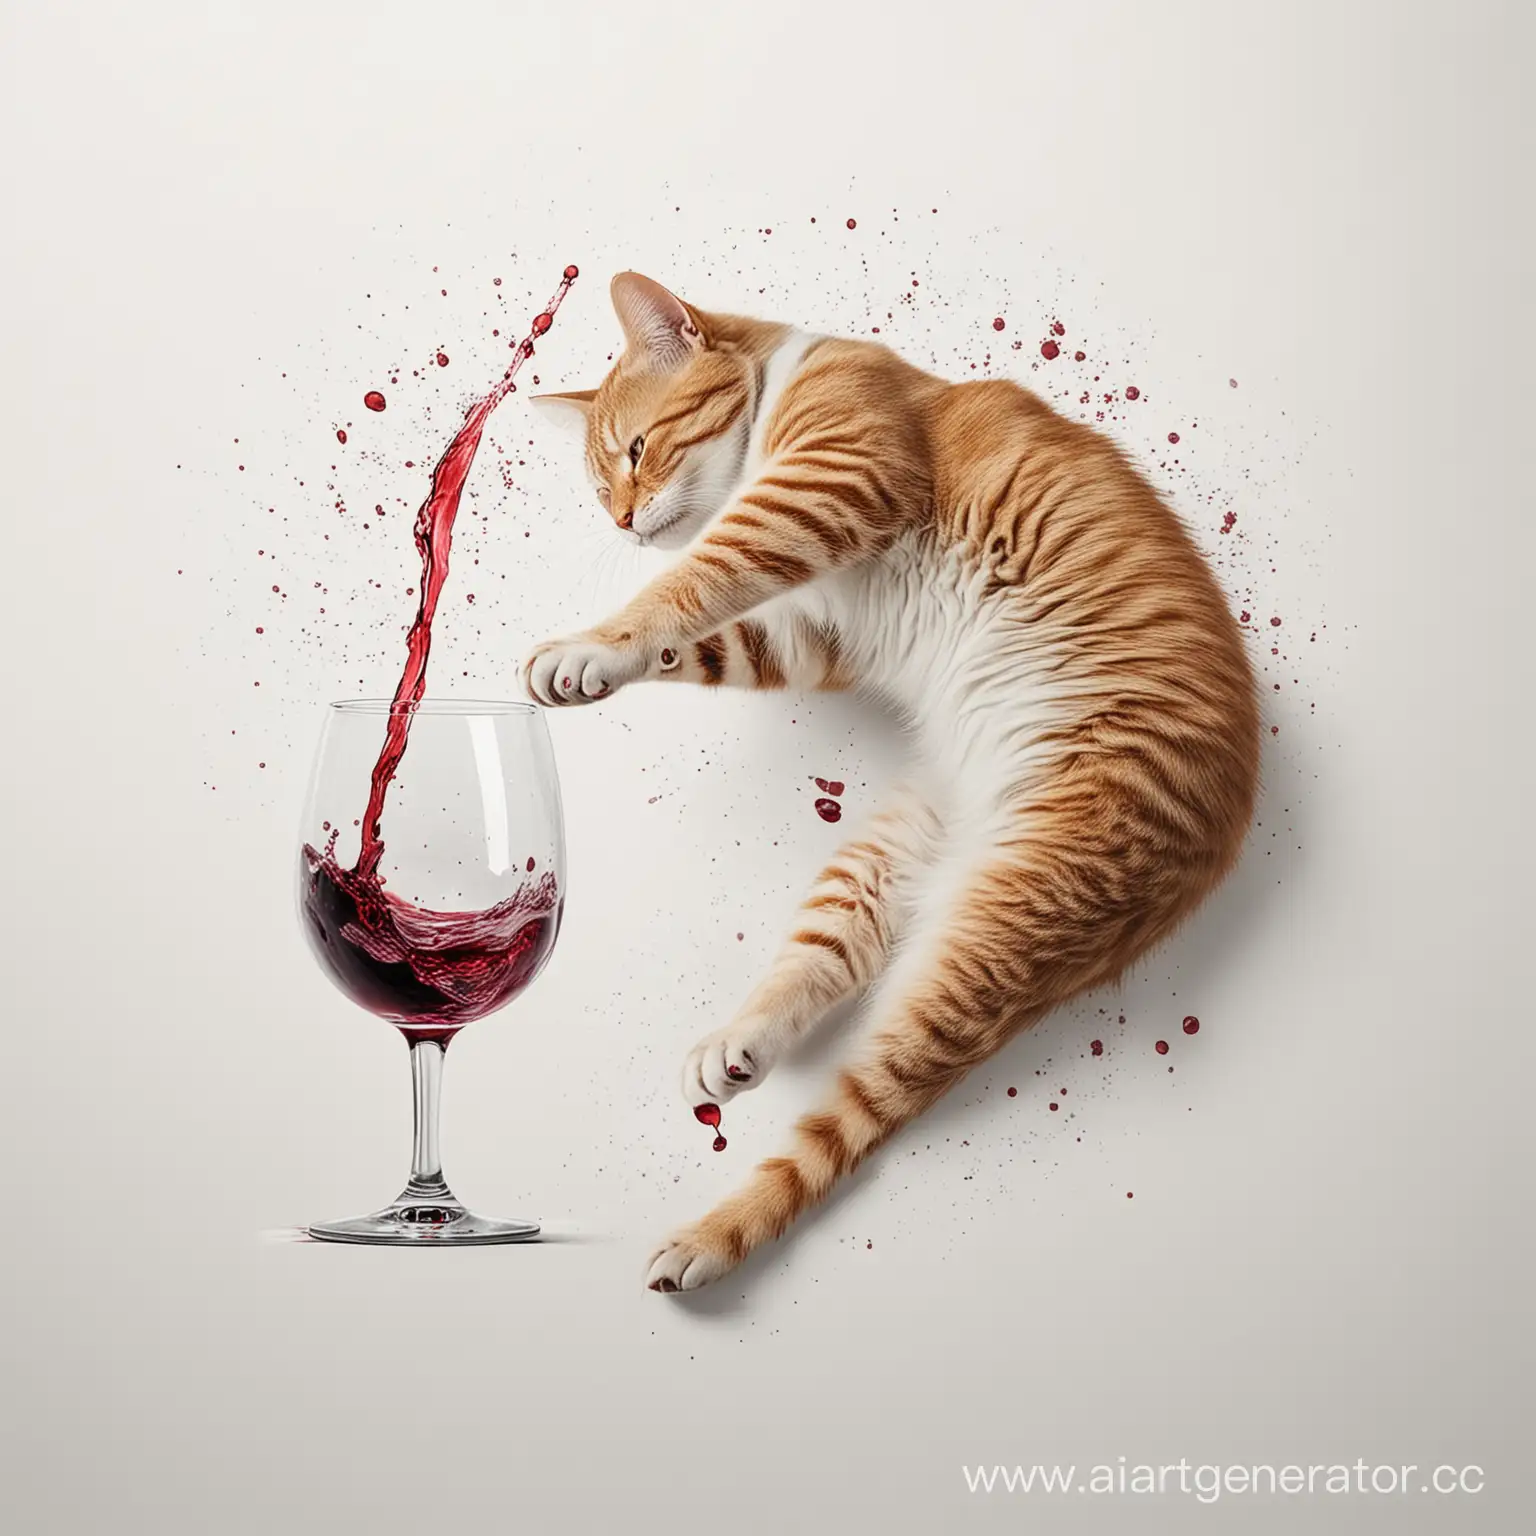 Mischievous-Cat-Spills-Wine-on-White-Surface